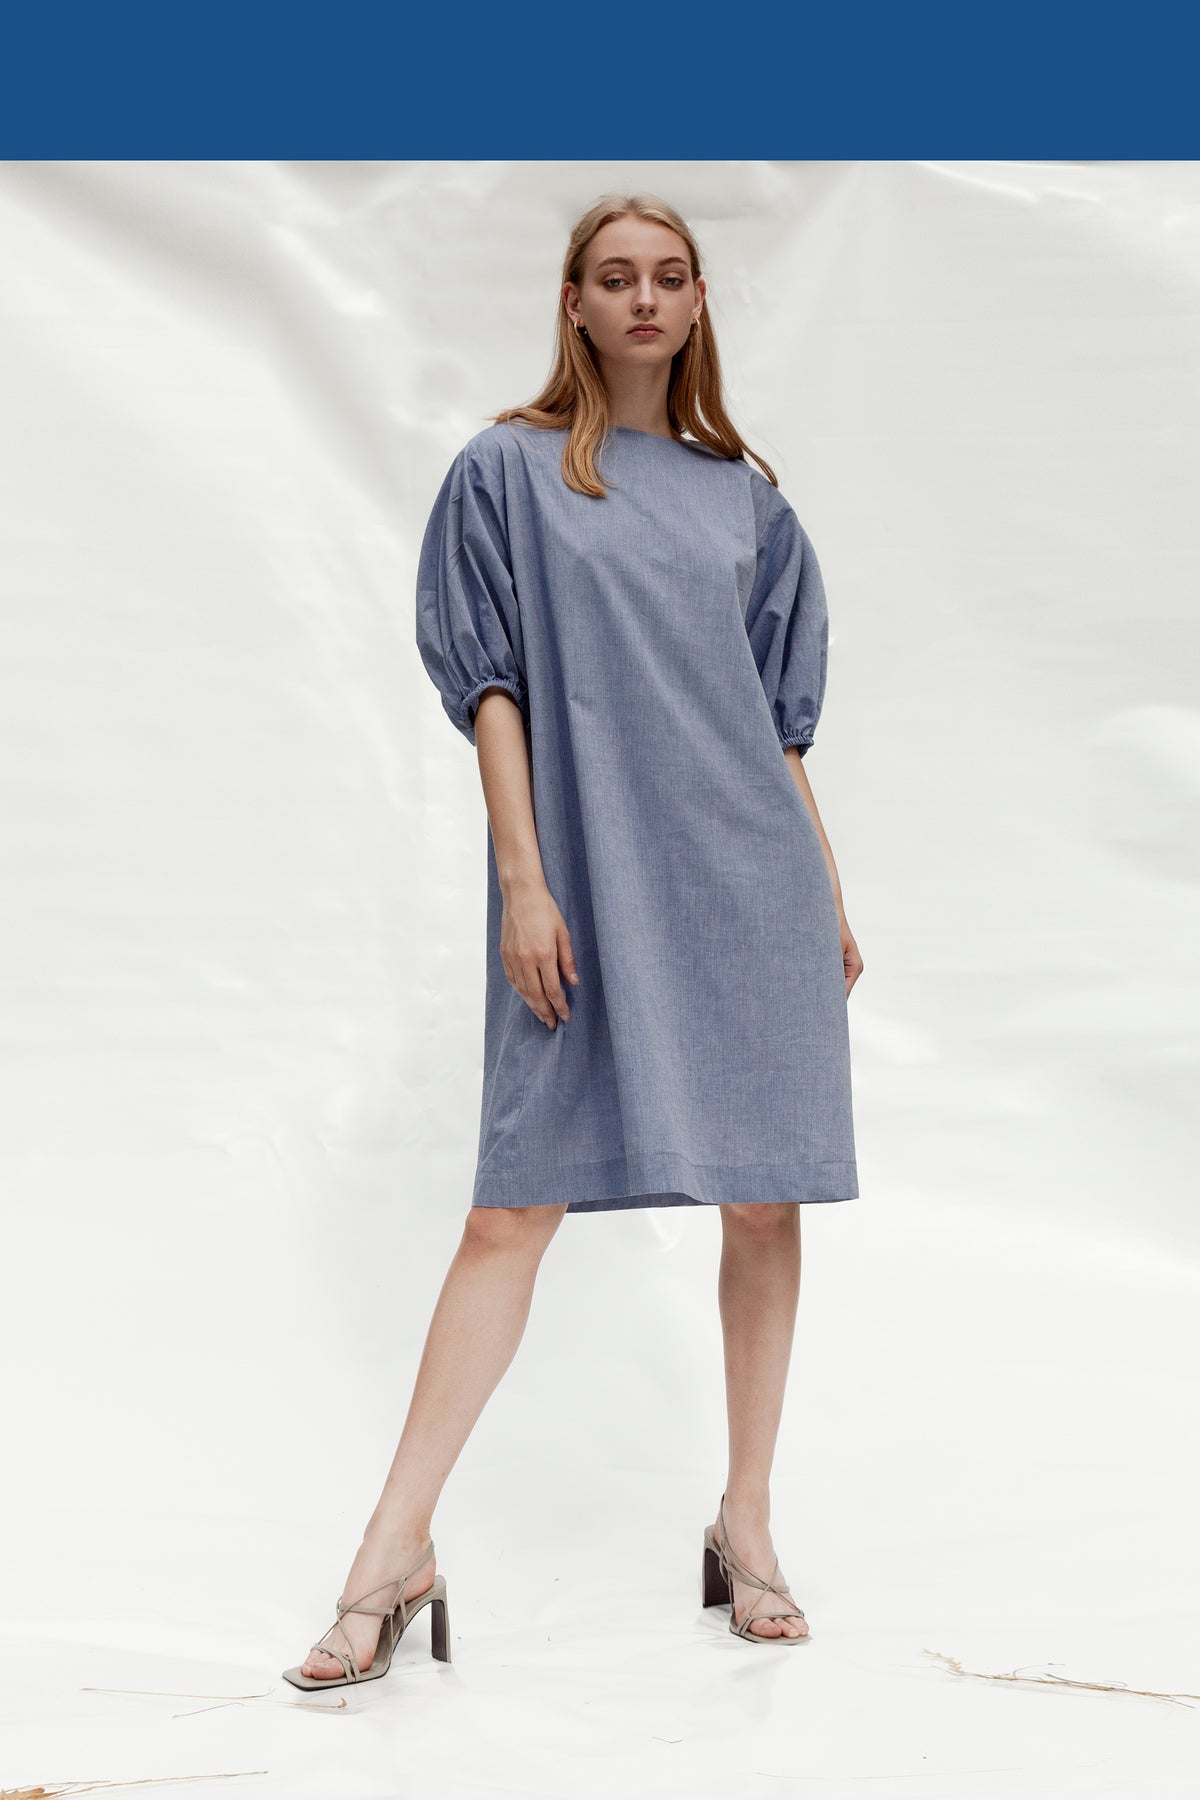 Gray-blue cotton dress